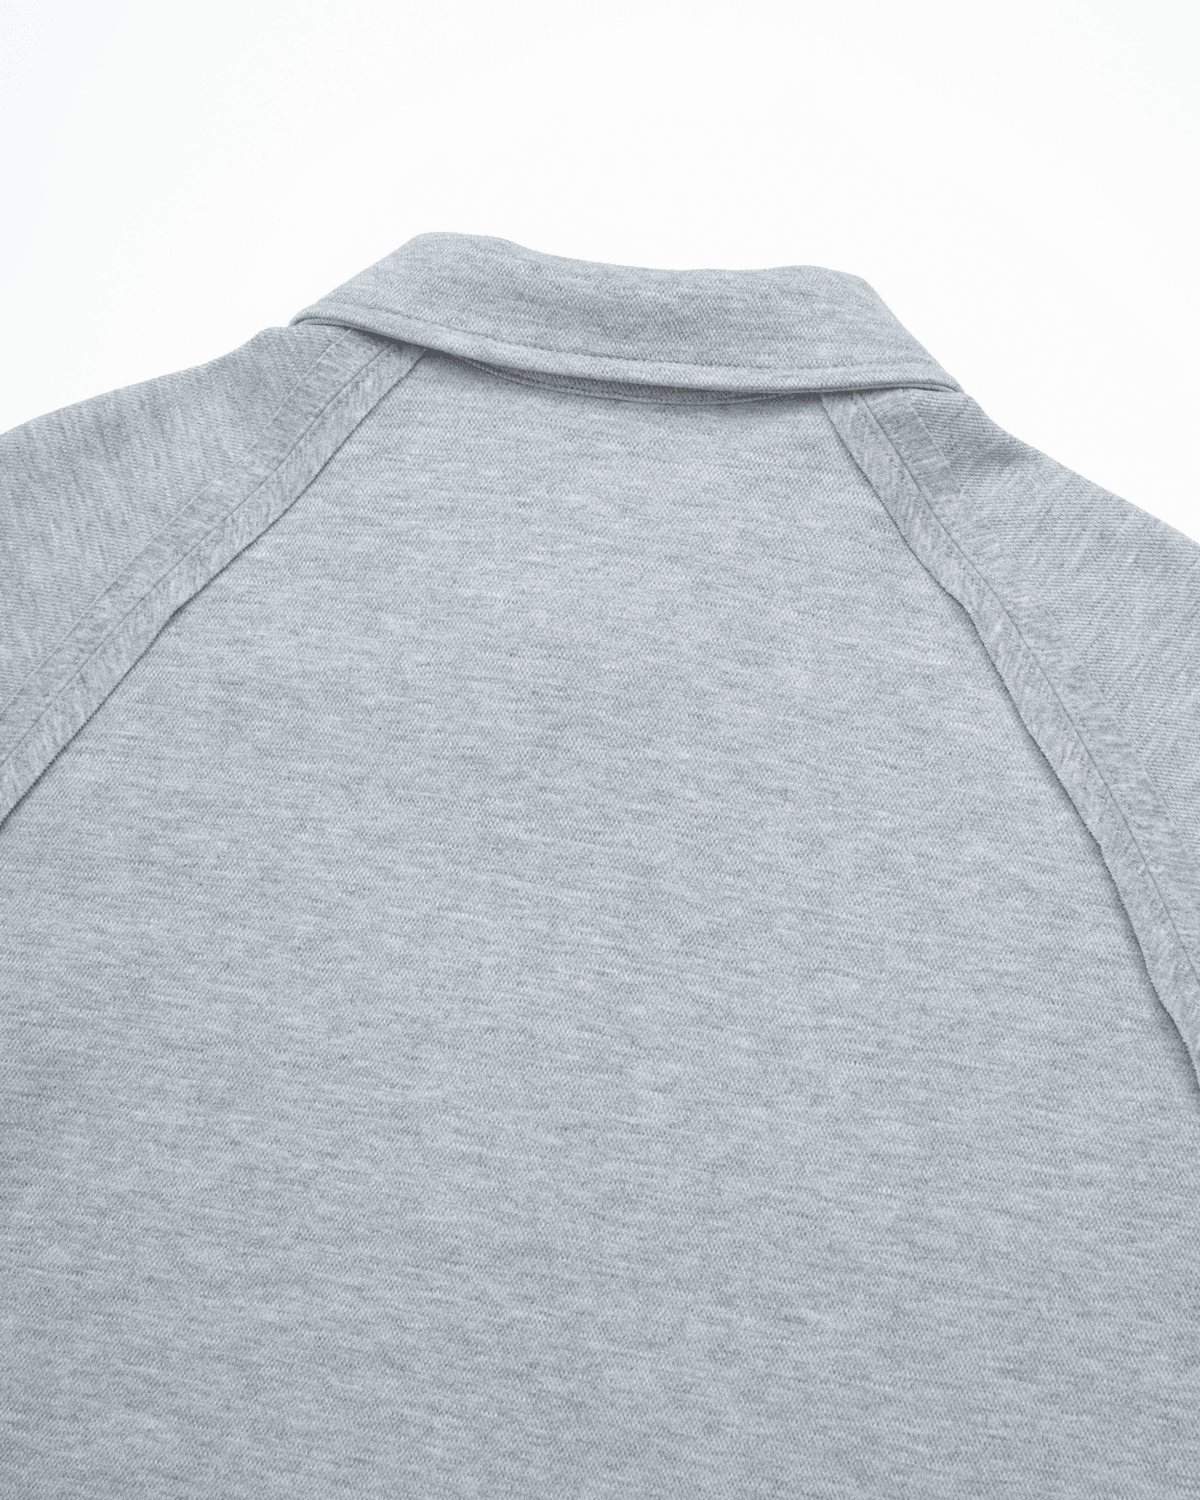 TAKA ORIGINAL LIMITED - Off The Label polo shirt grey